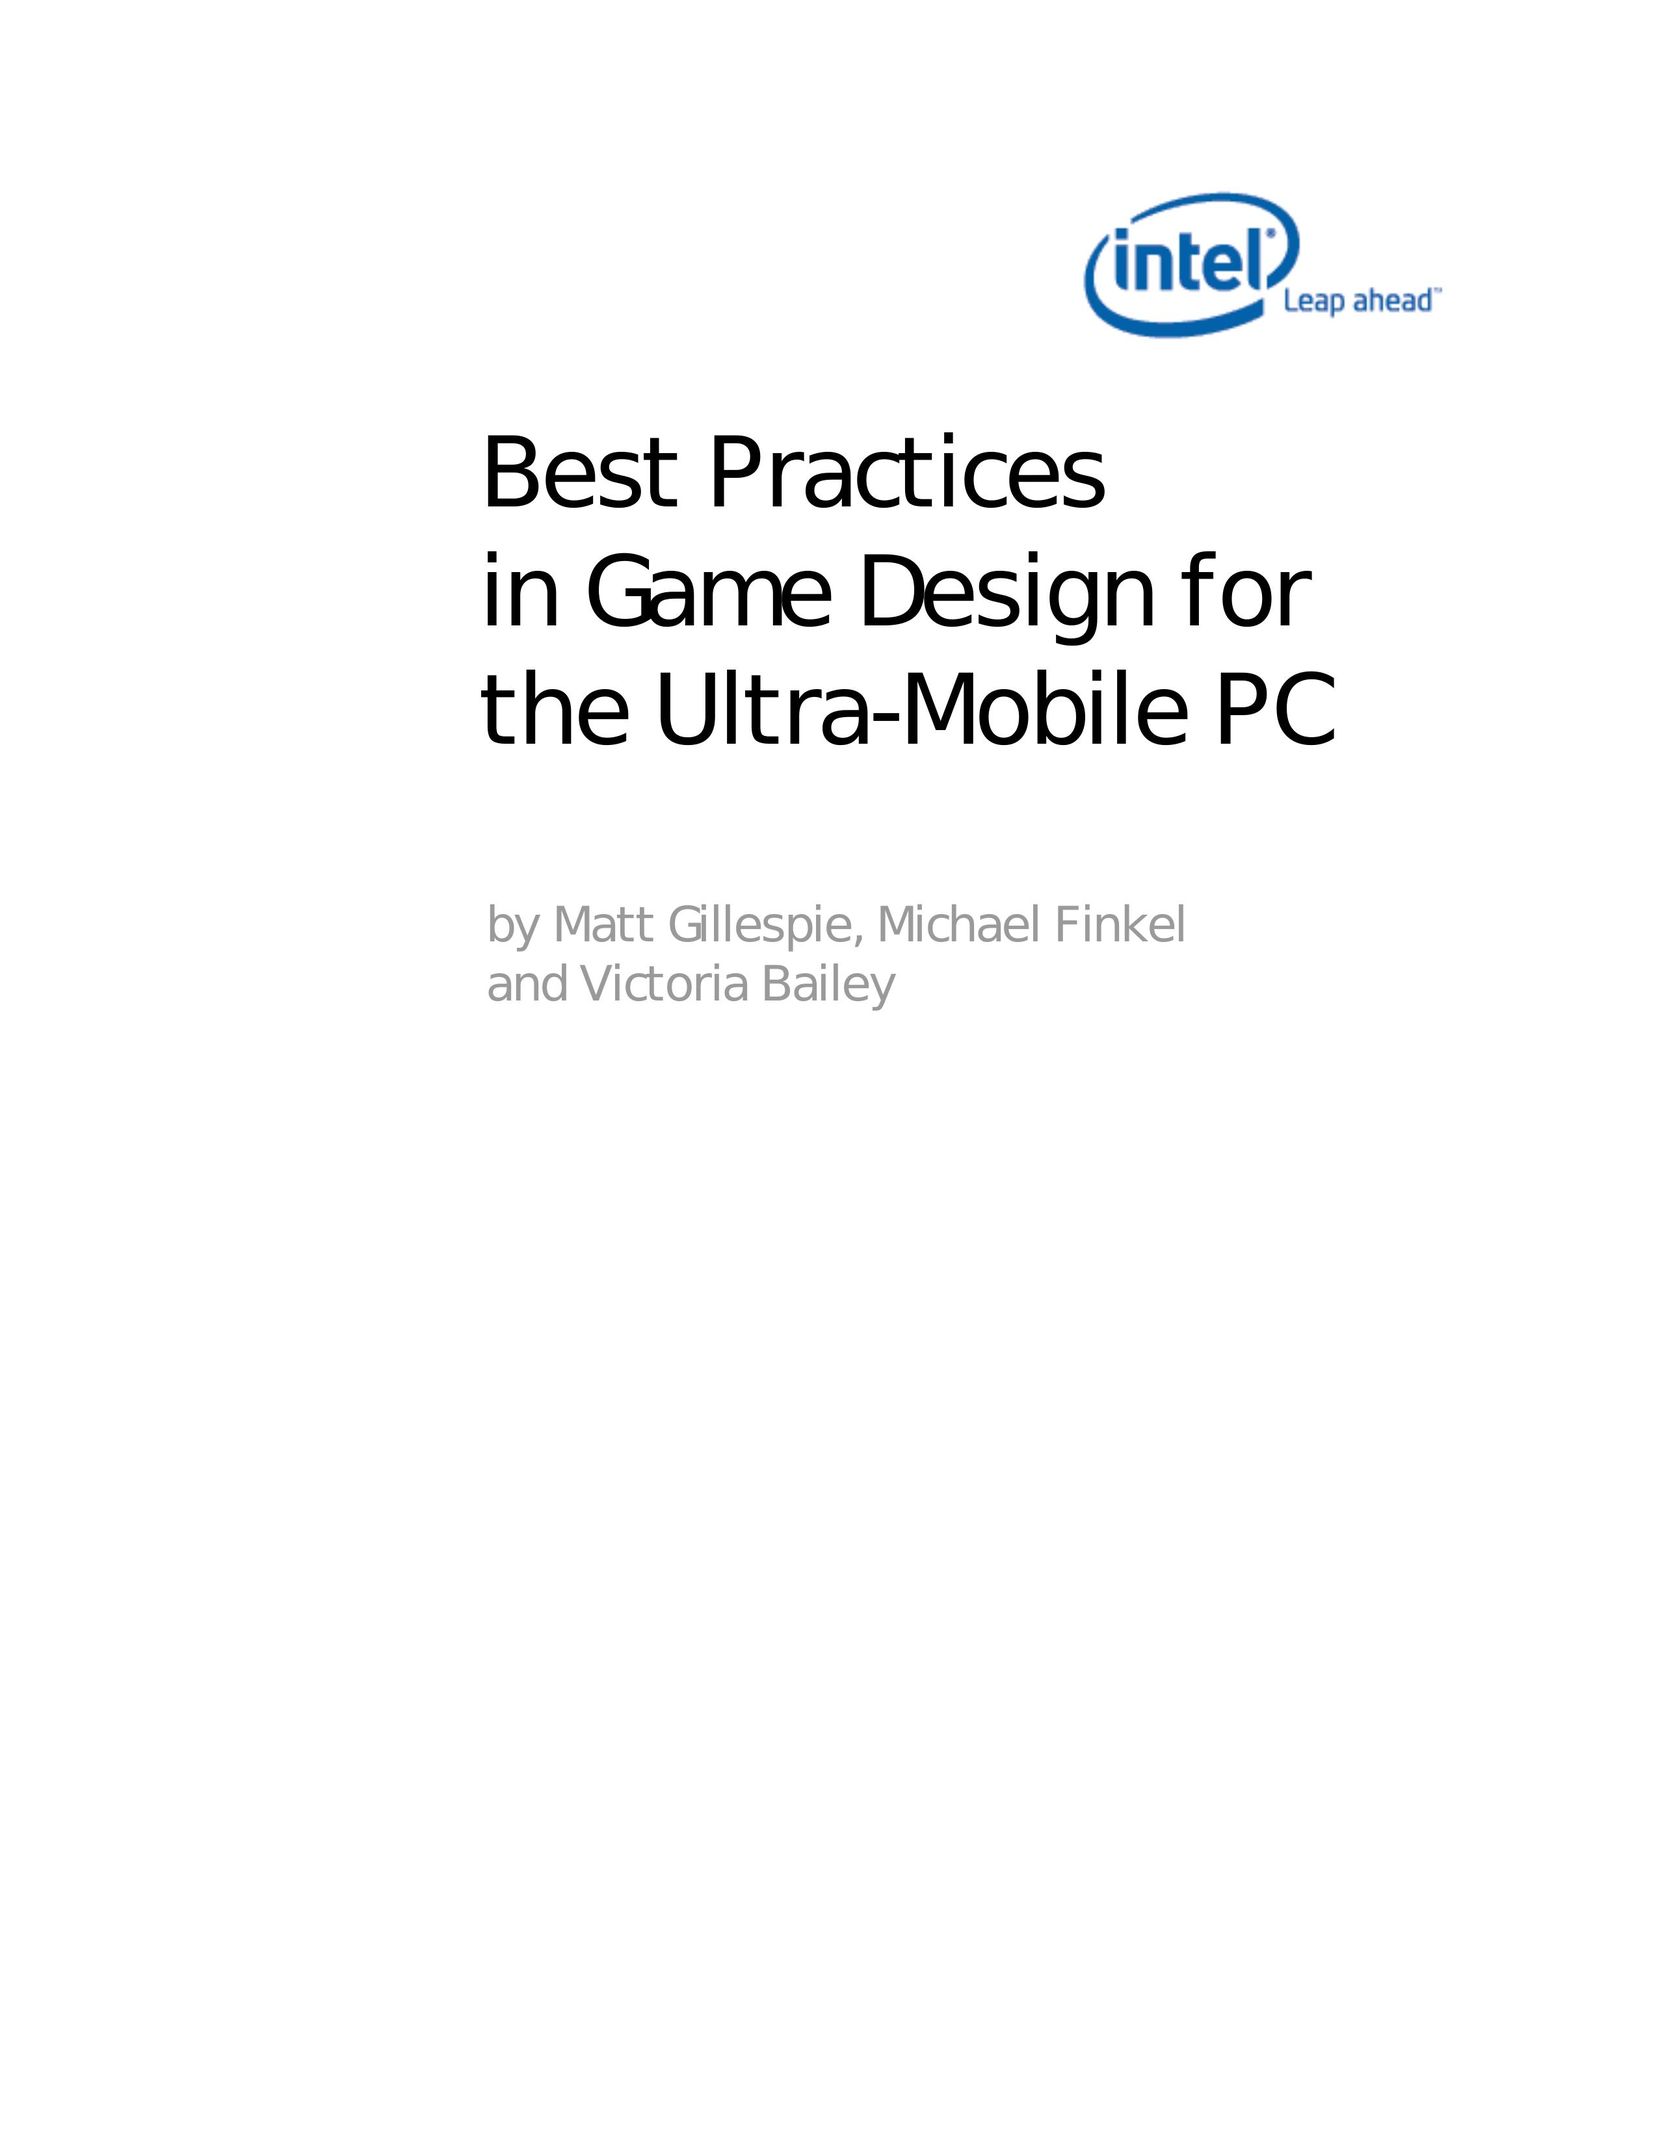 Intel UMPC Laptop User Manual